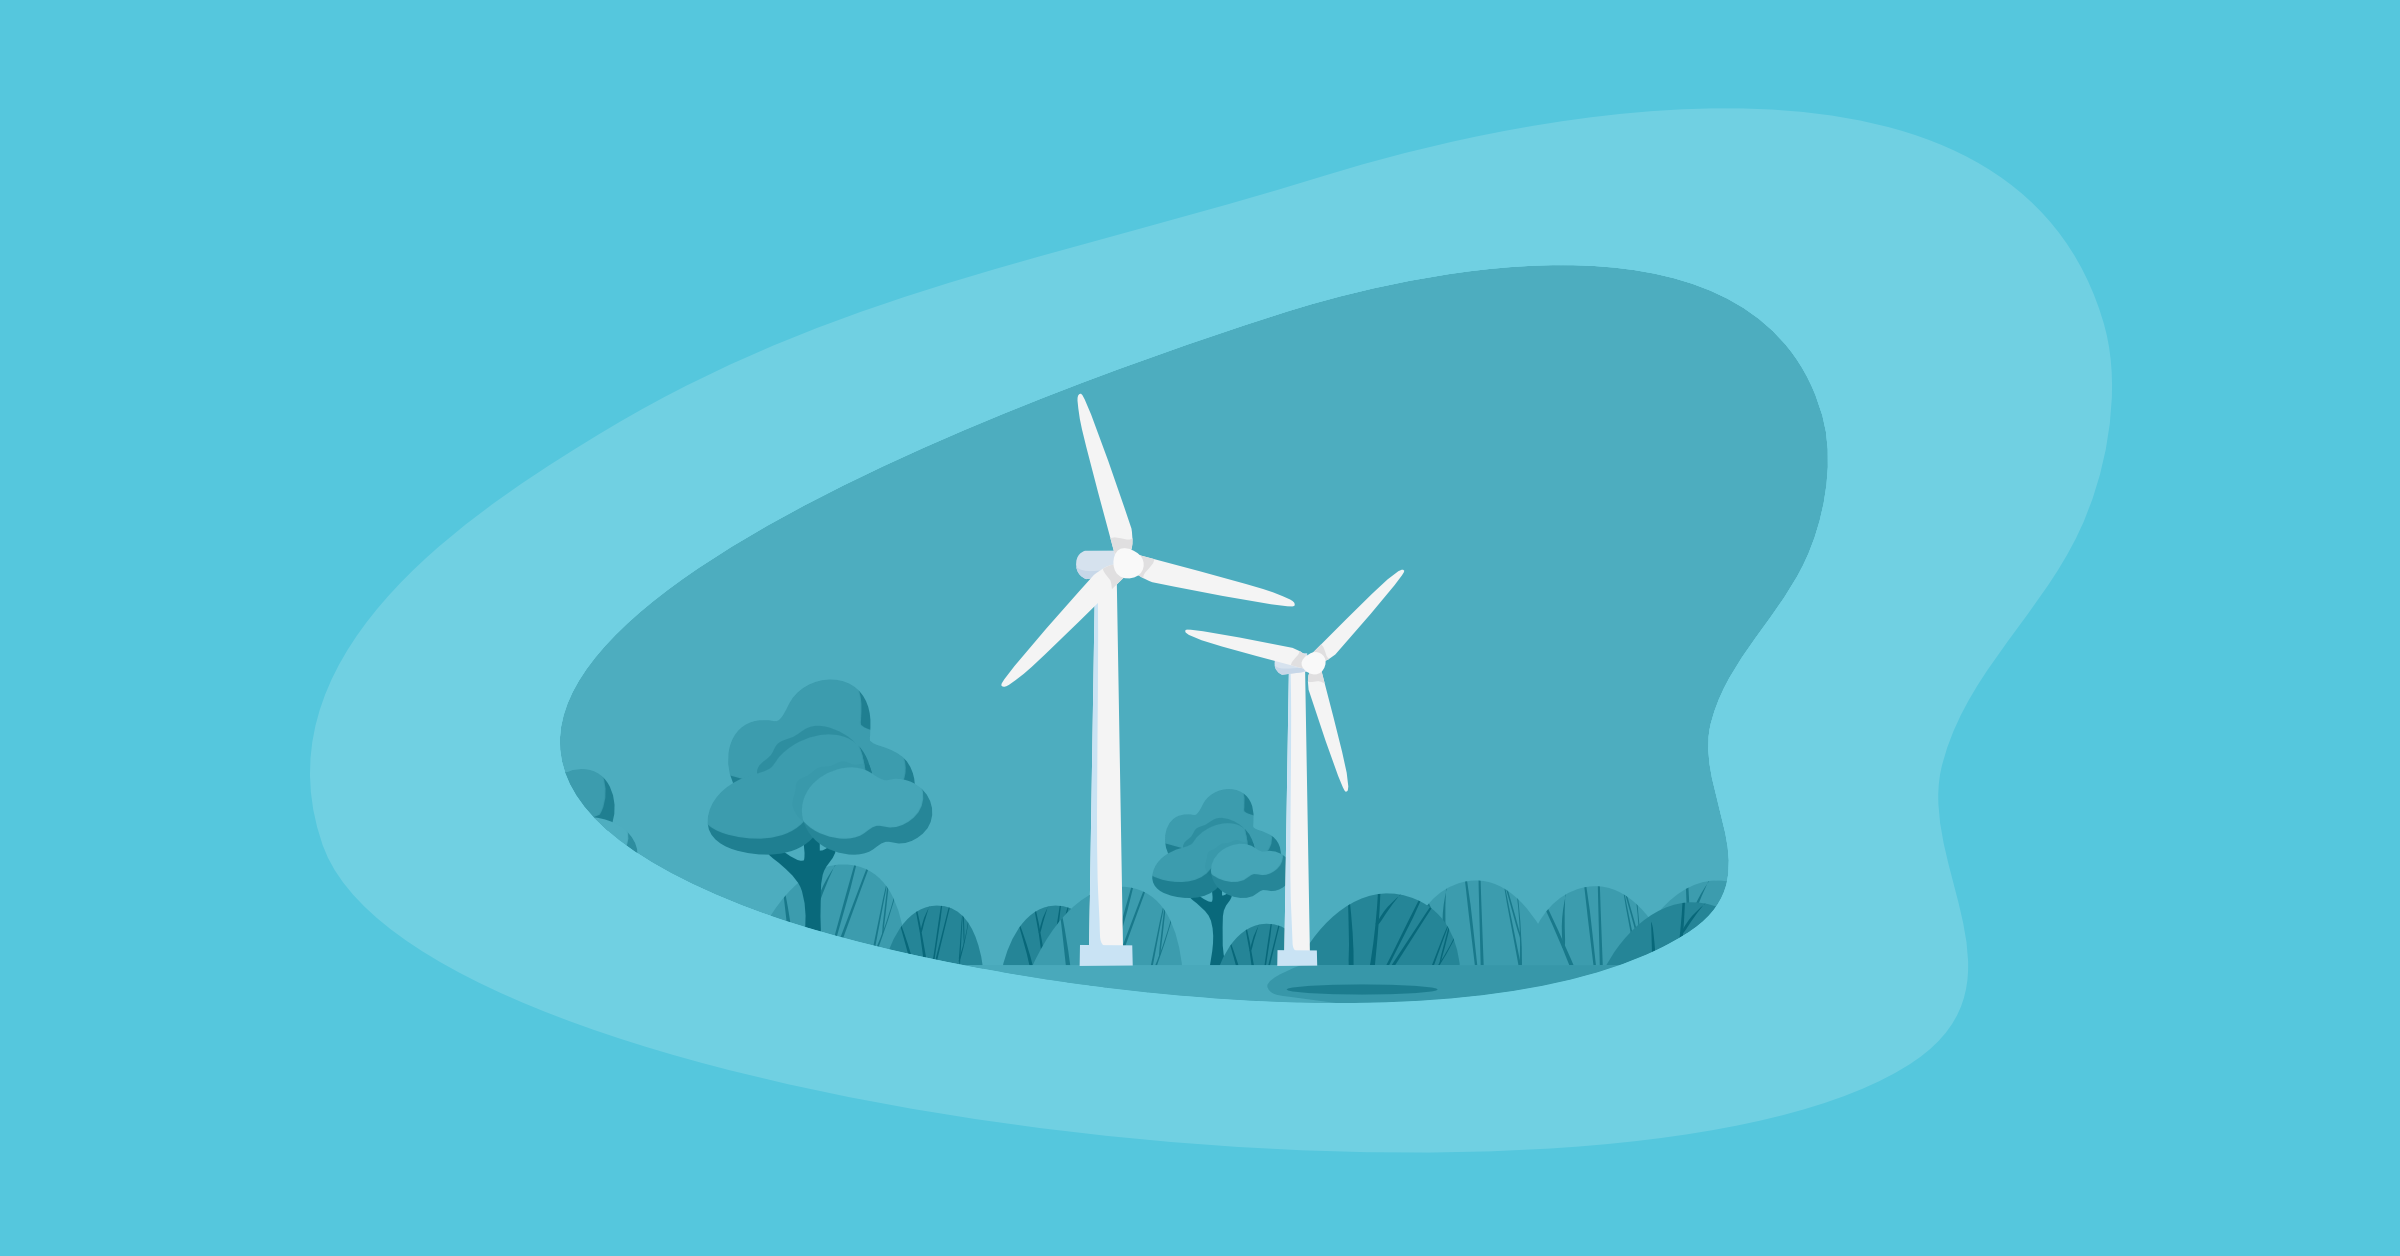 Illustration of wind energy